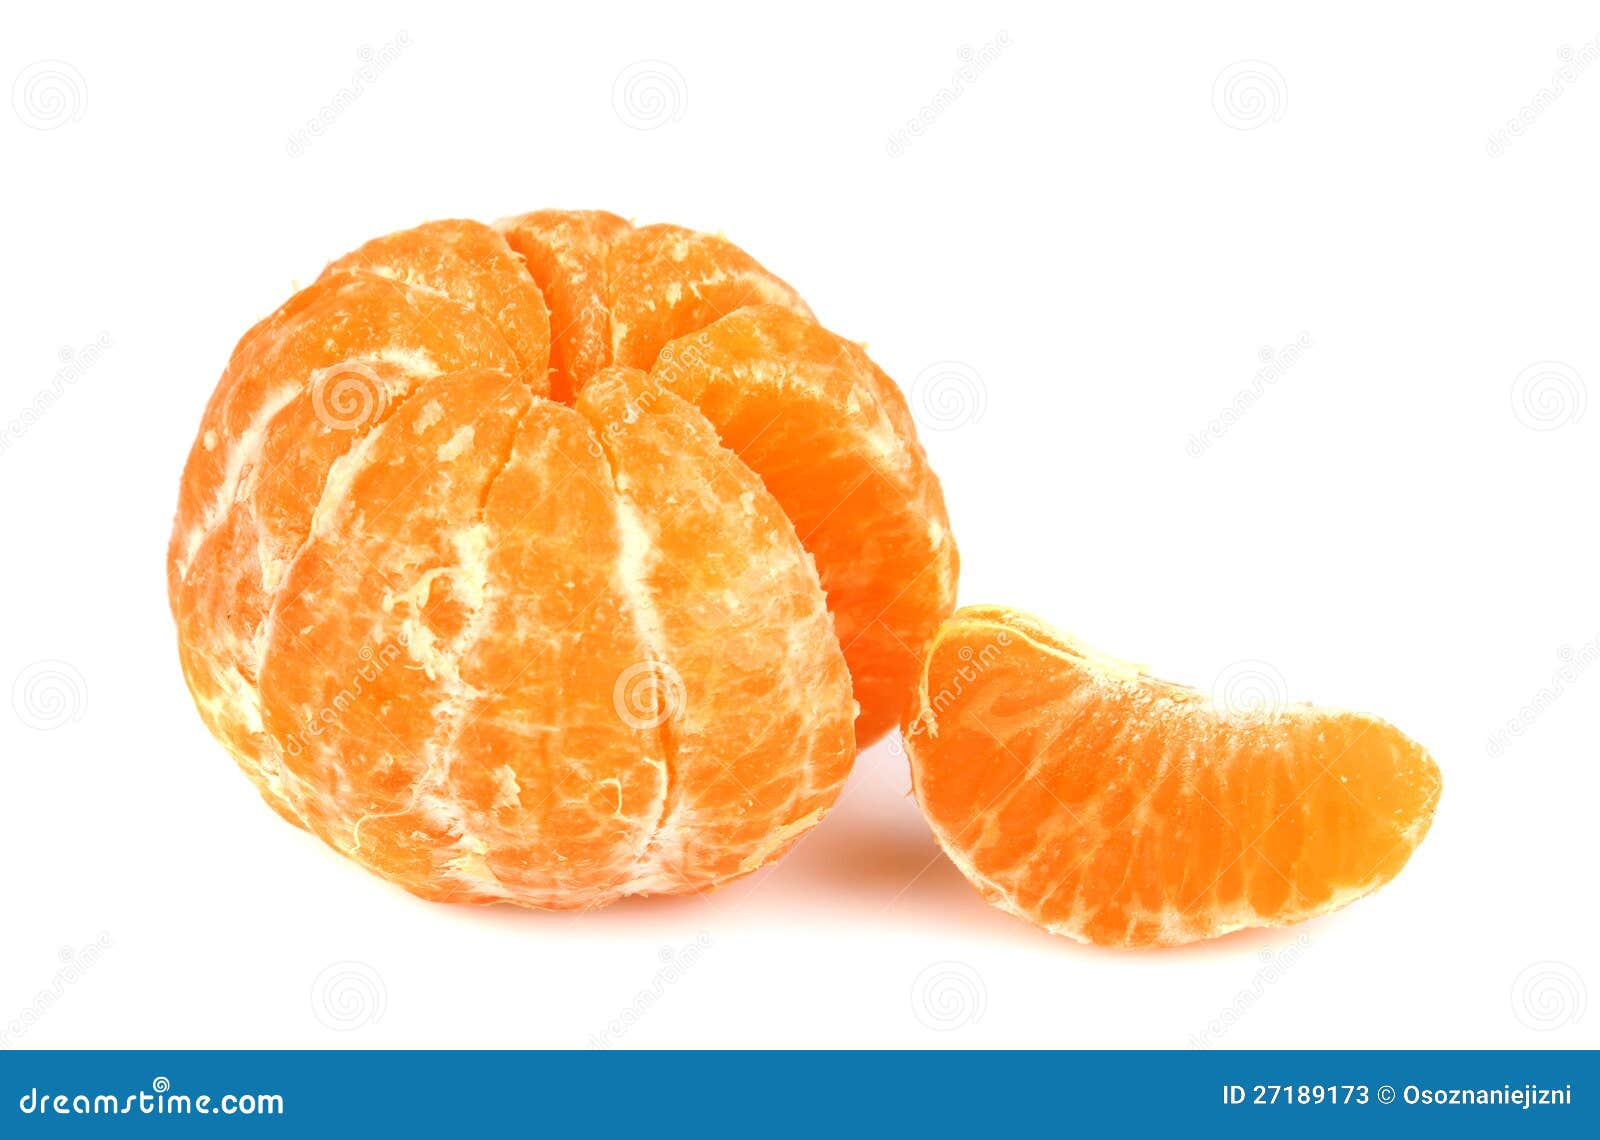 ripe peeled orange with a slice